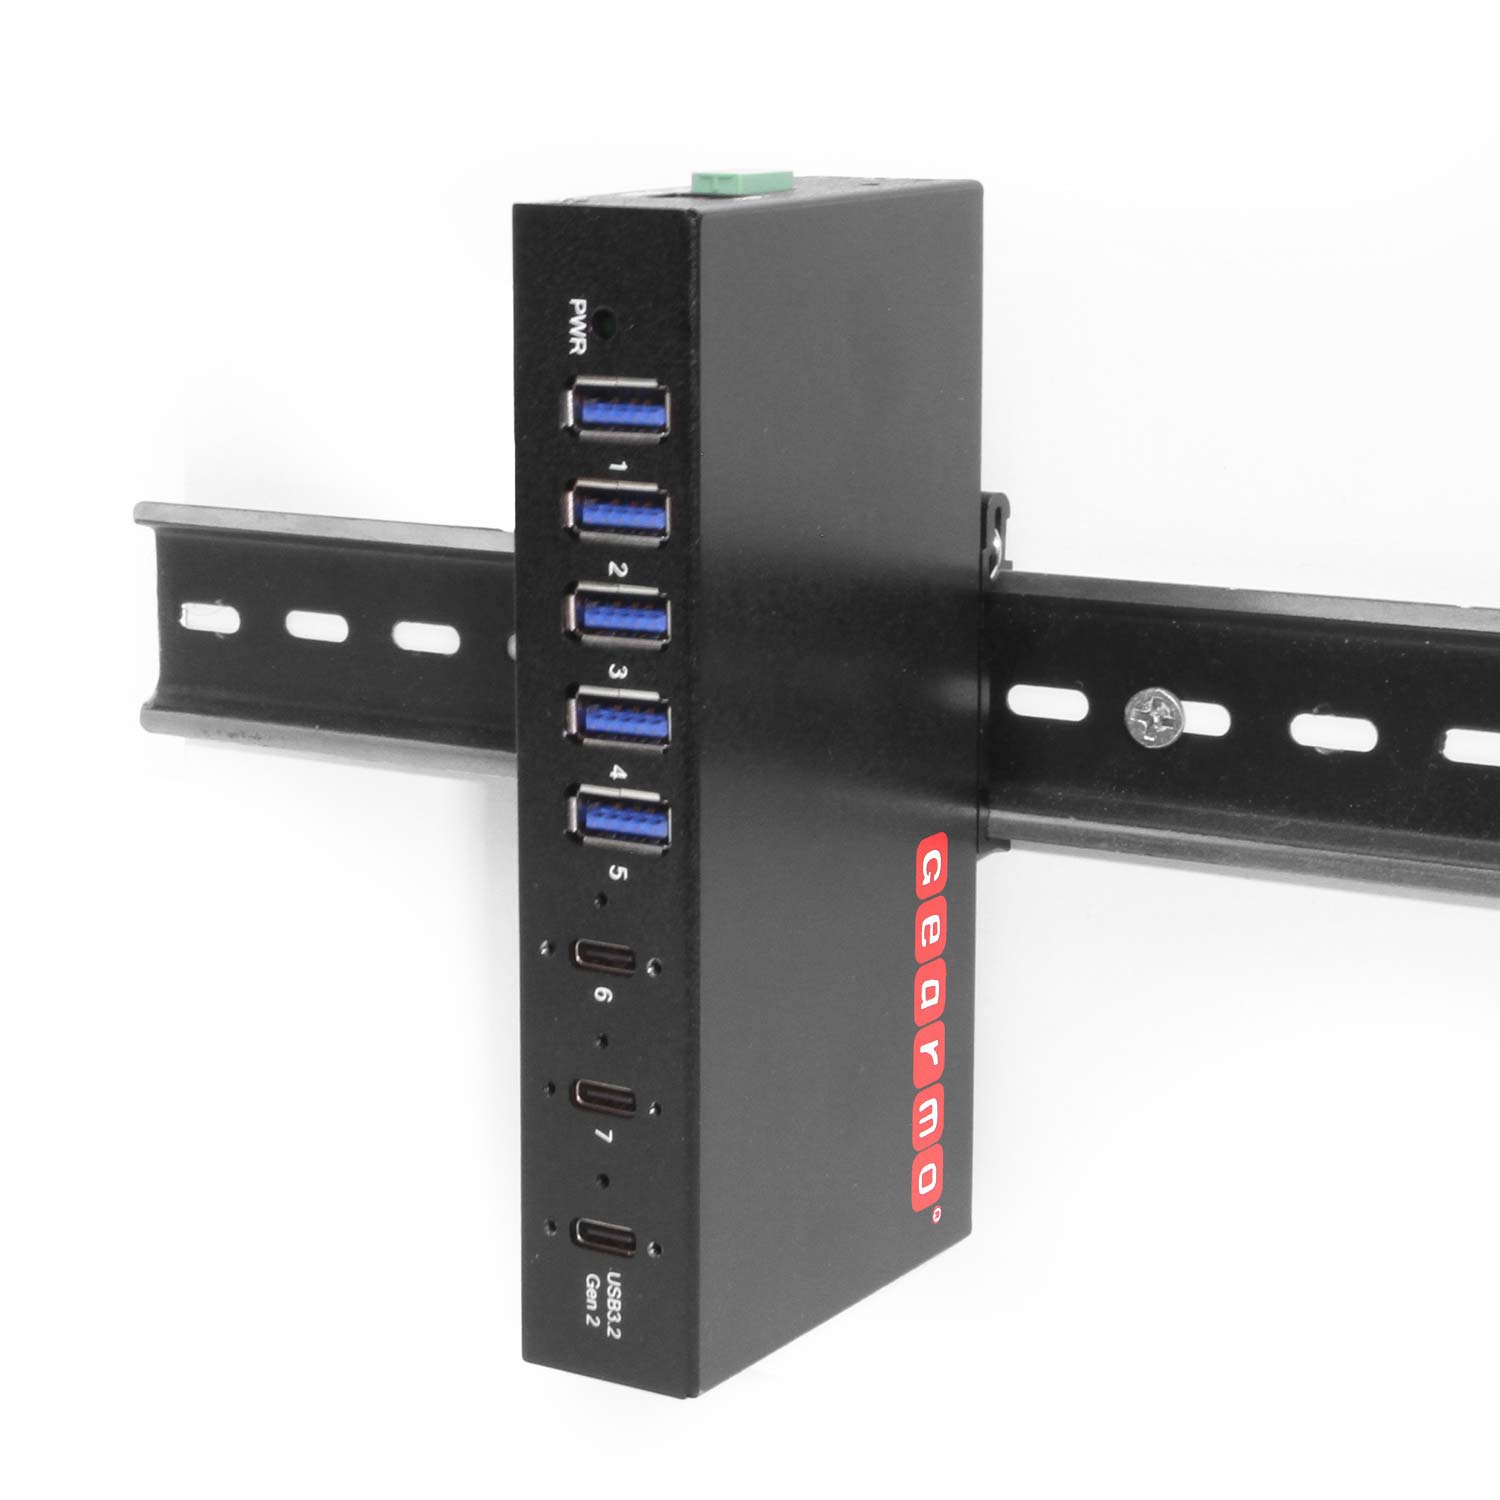 Buy Renkforce 7+2 ports USB 3.2 1st Gen (USB 3.0) hub + quick-charge port,  + LED indicator lights Black